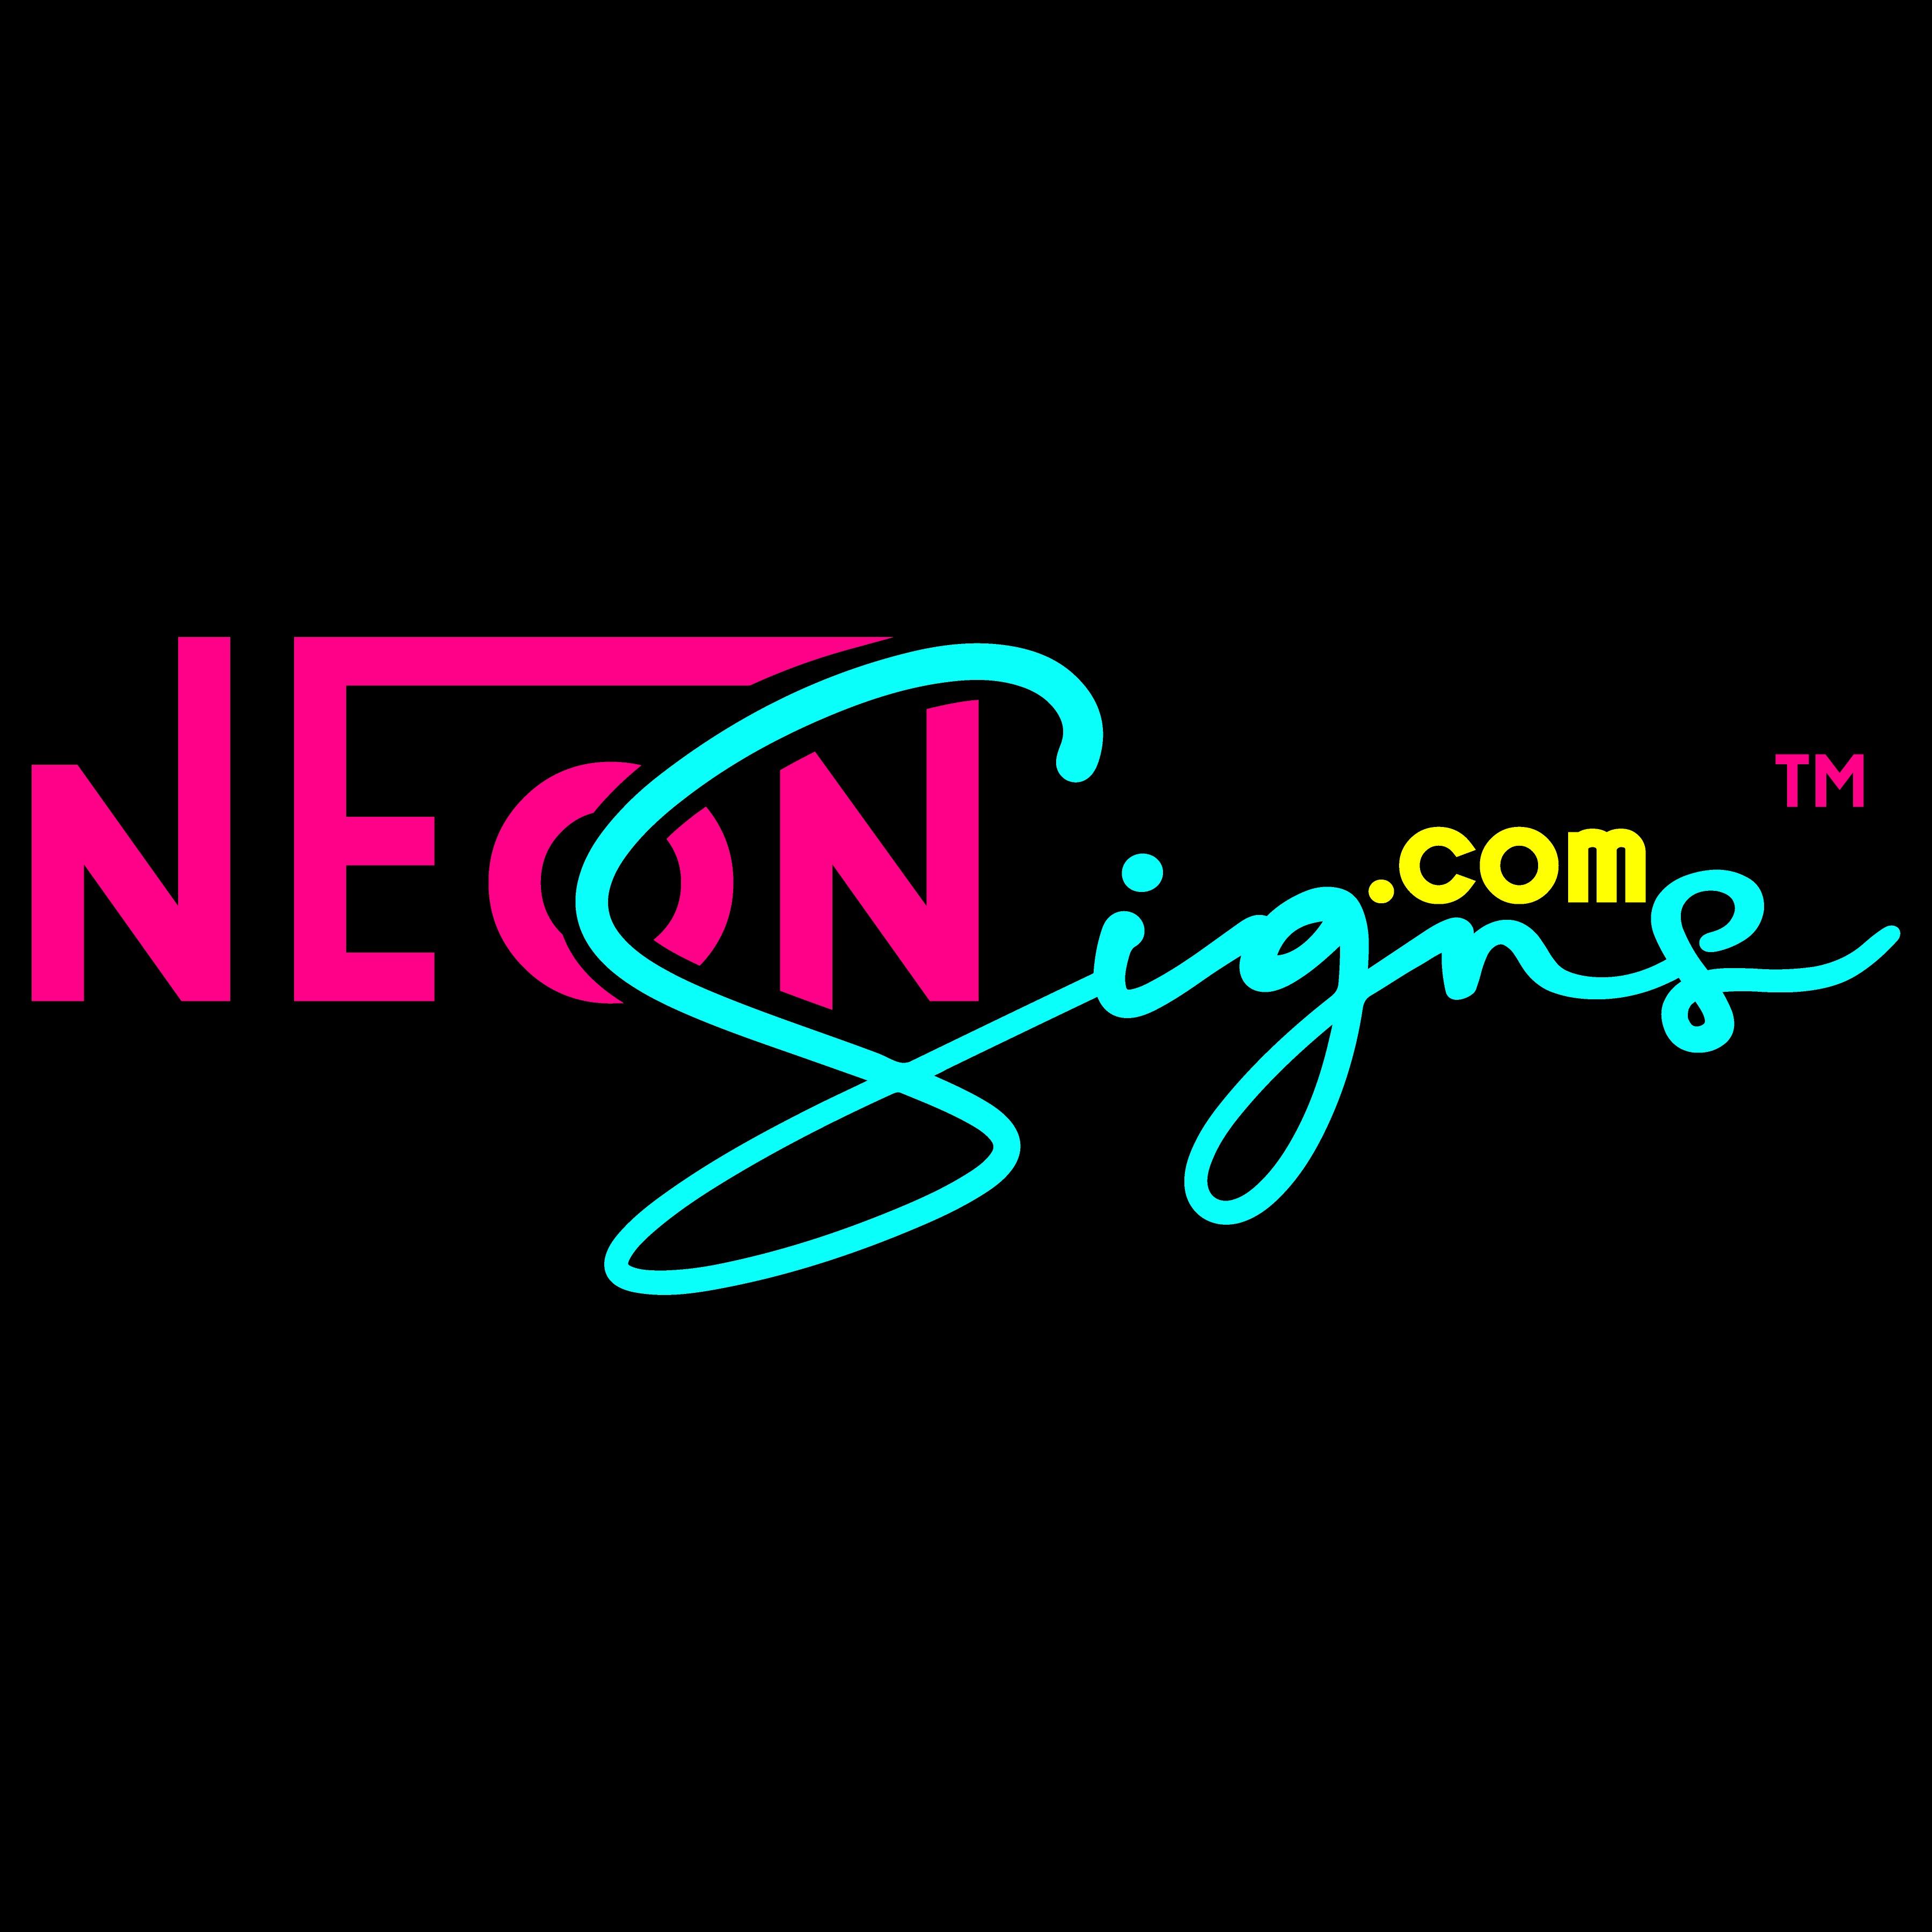 NeonSigns.com in Bad Honnef - Logo